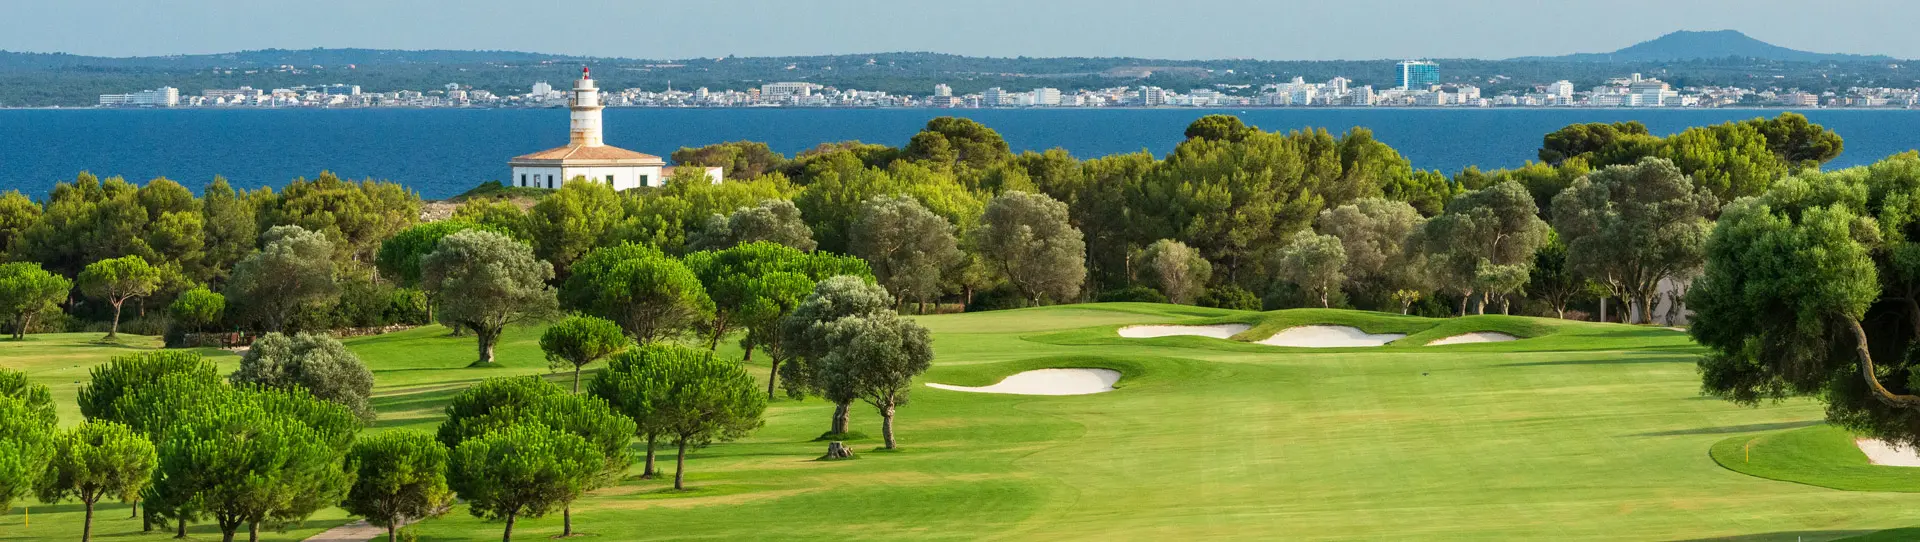 Spain golf courses - Alcanada Golf Course - Photo 1